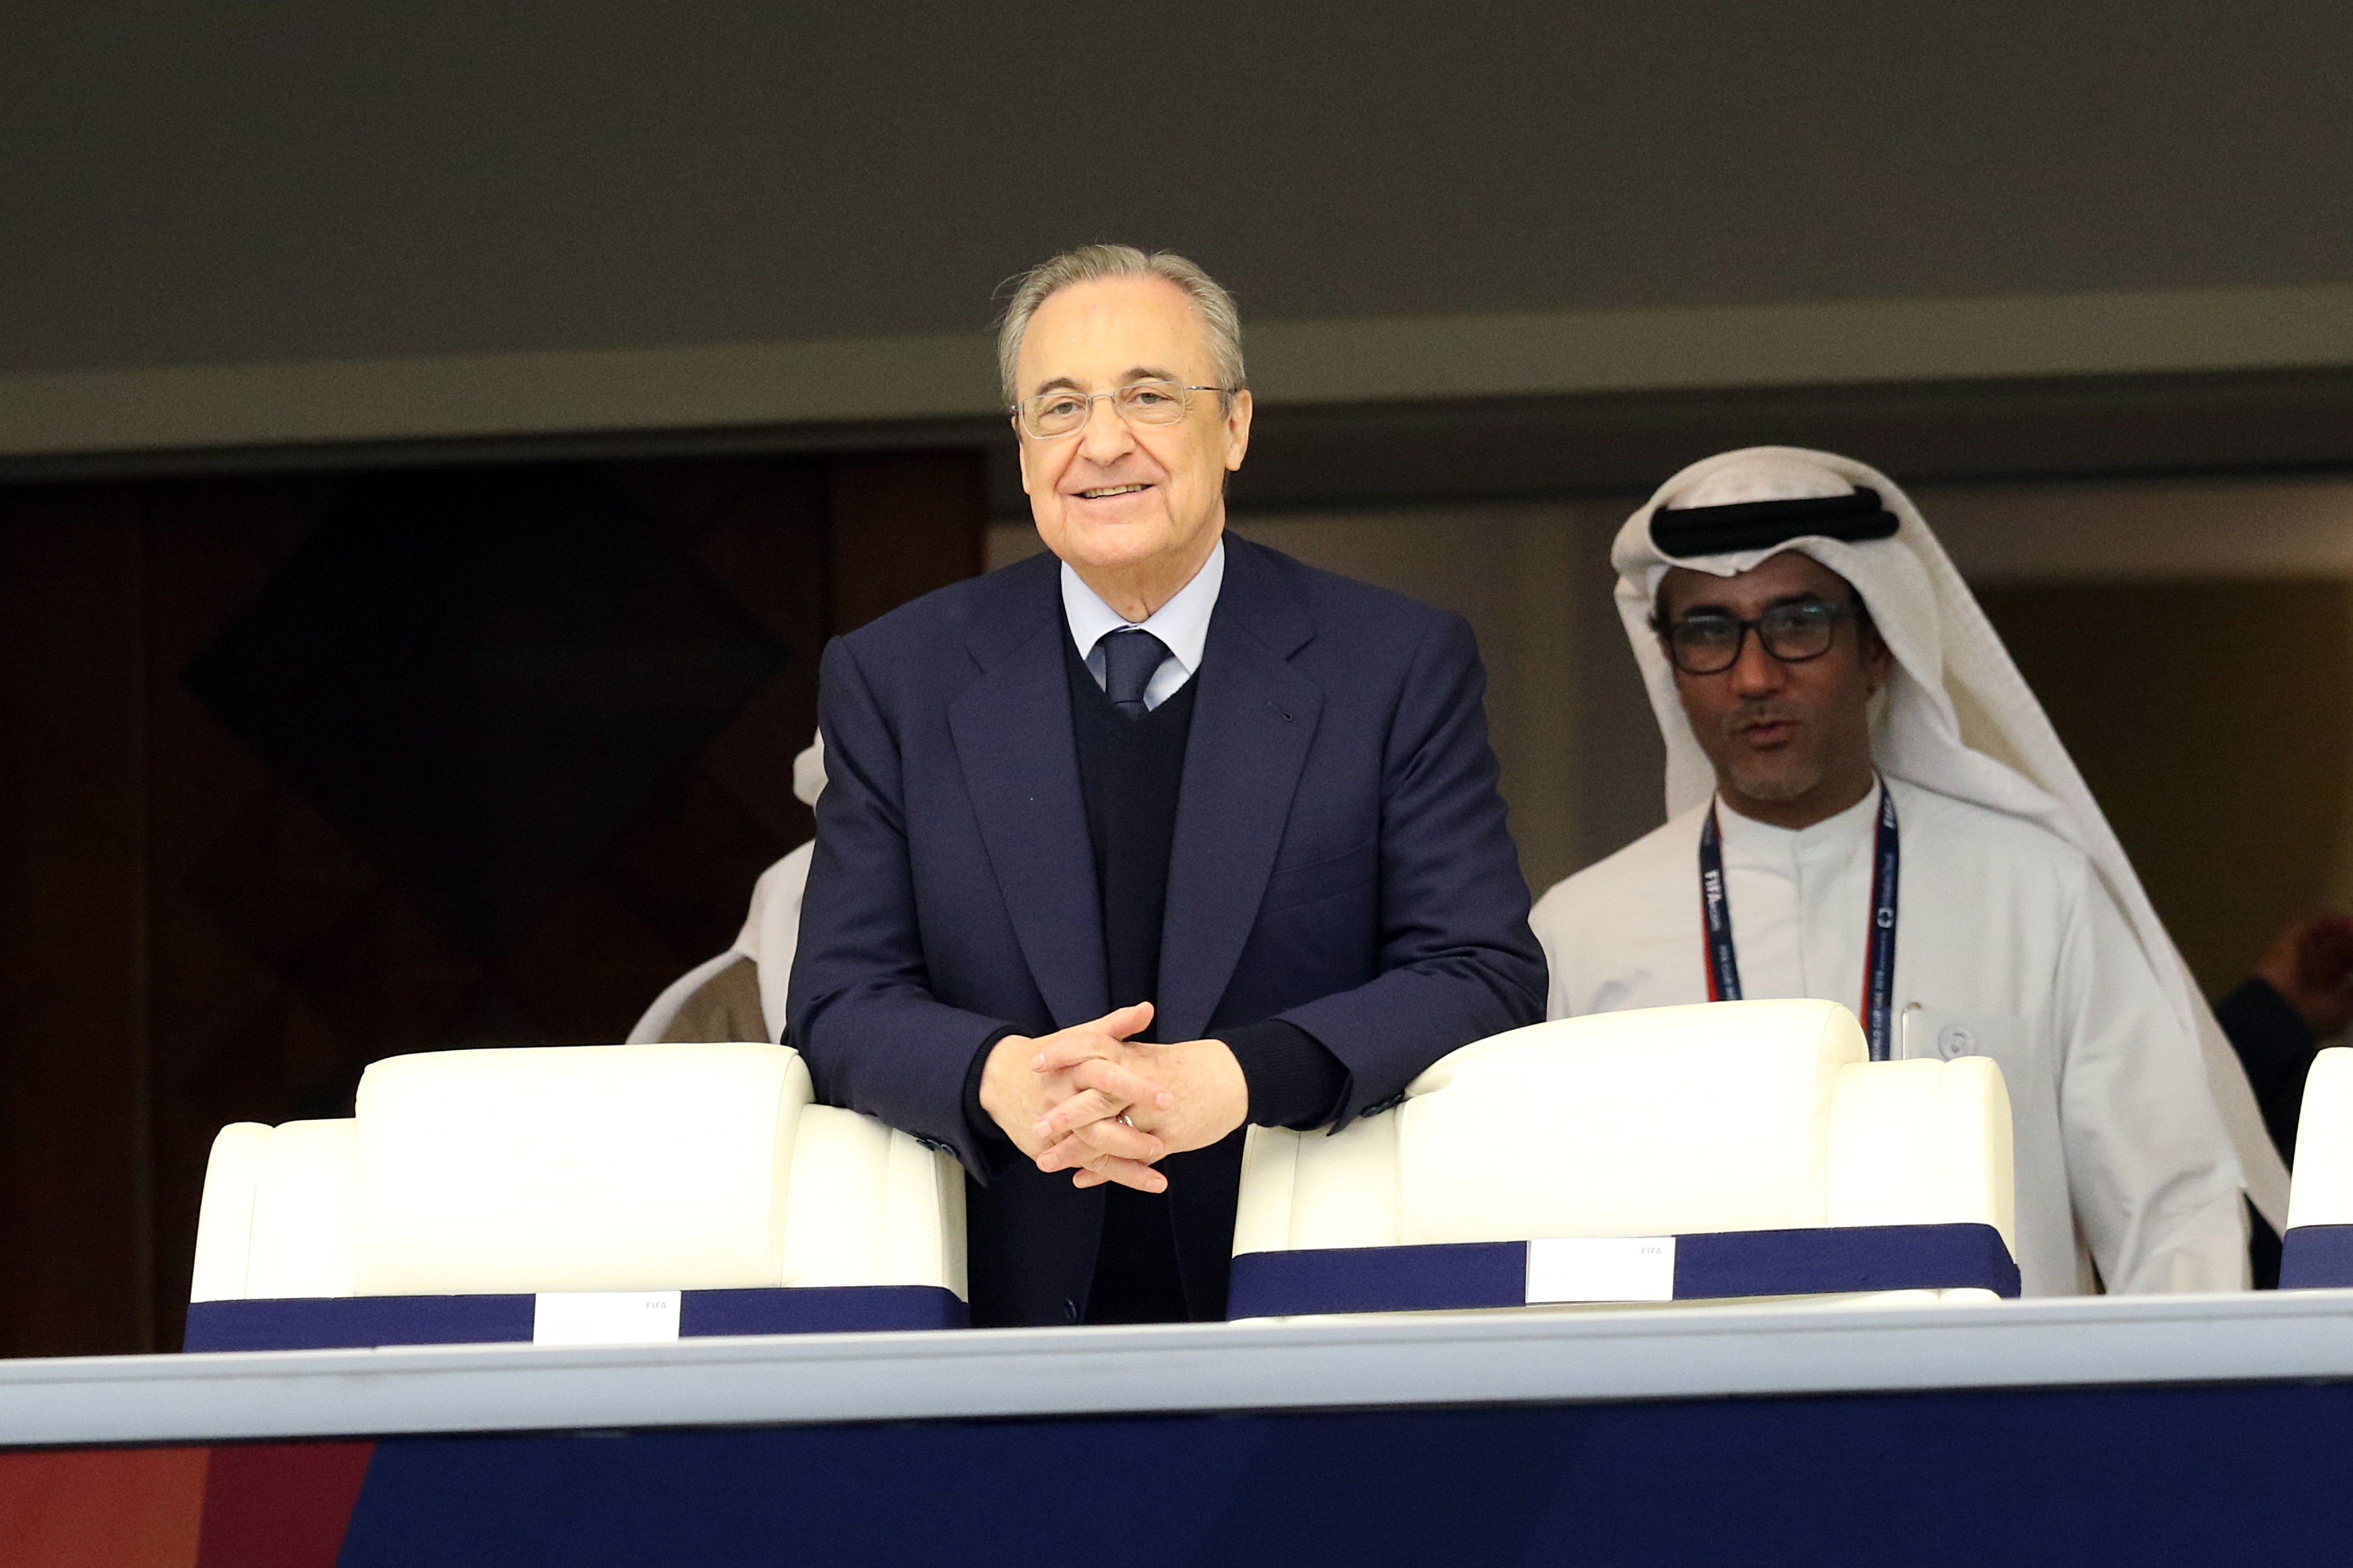 Florentino Pérez, nou president de l'Associació Mundial de Clubs